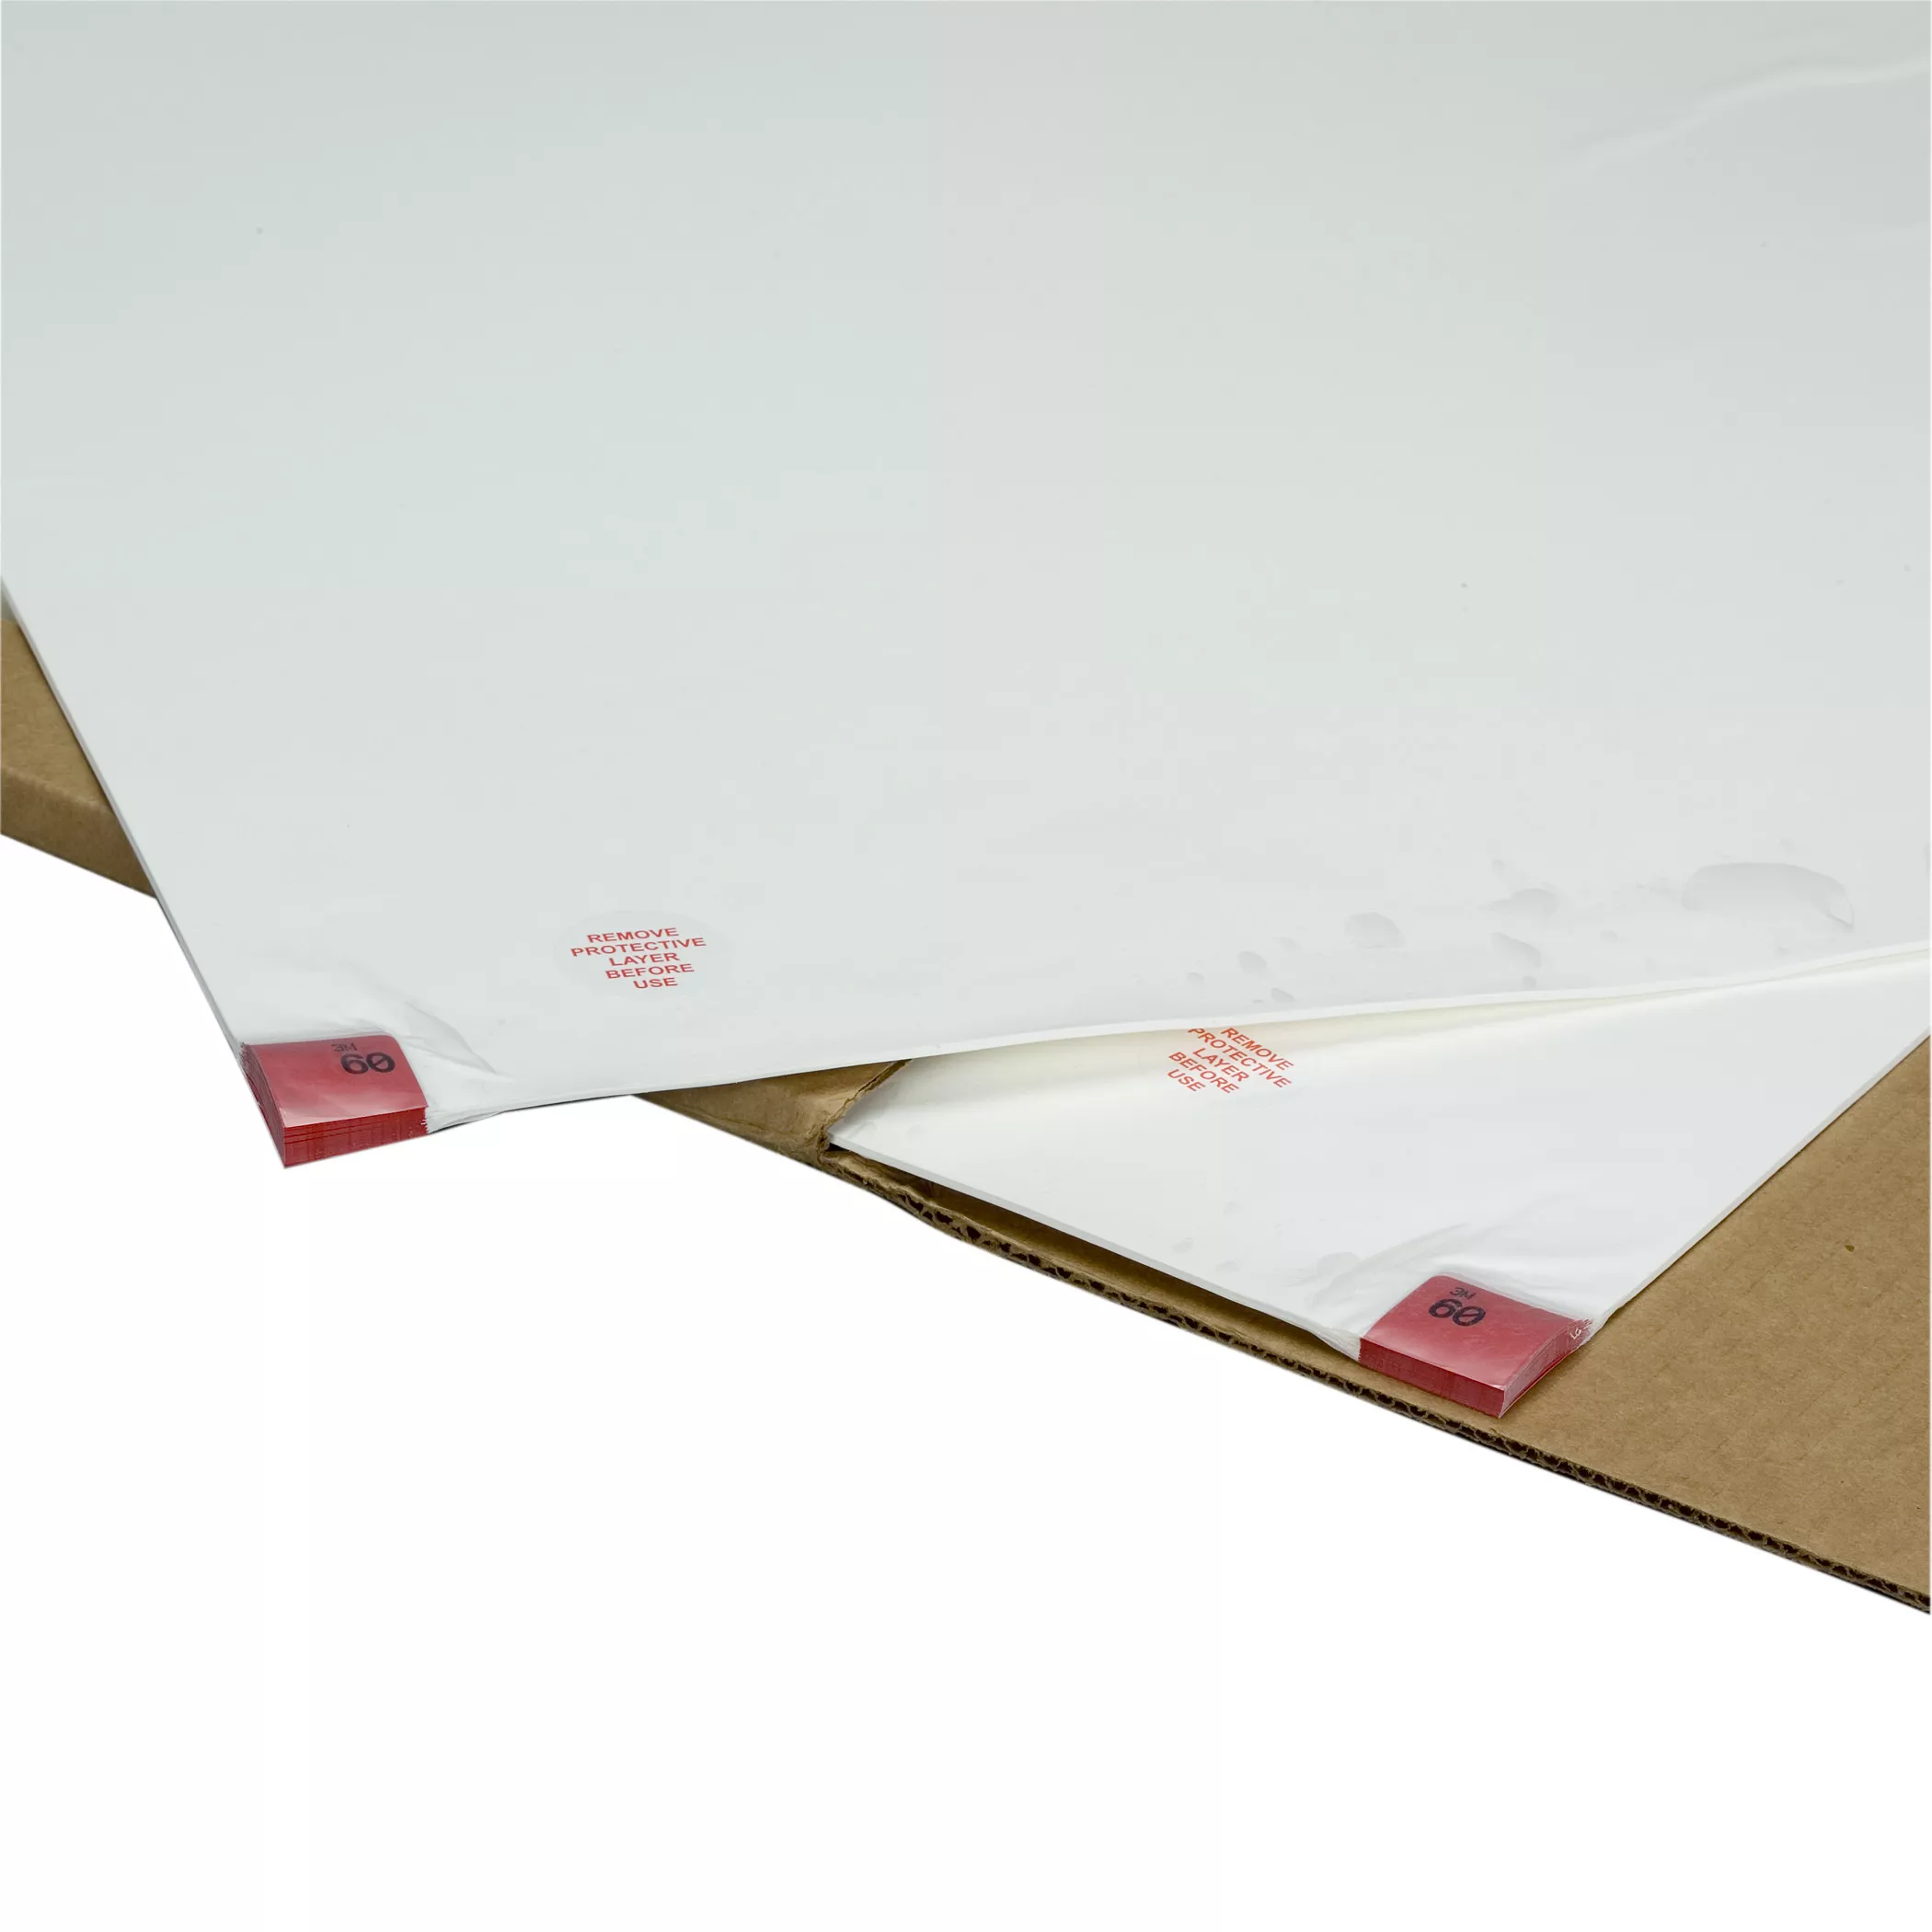 3M™ Clean-Walk Replacement Pad 5842, White, 30 in x 24 in, 60 Sheets Per
Pad, 2 Pads Per Case